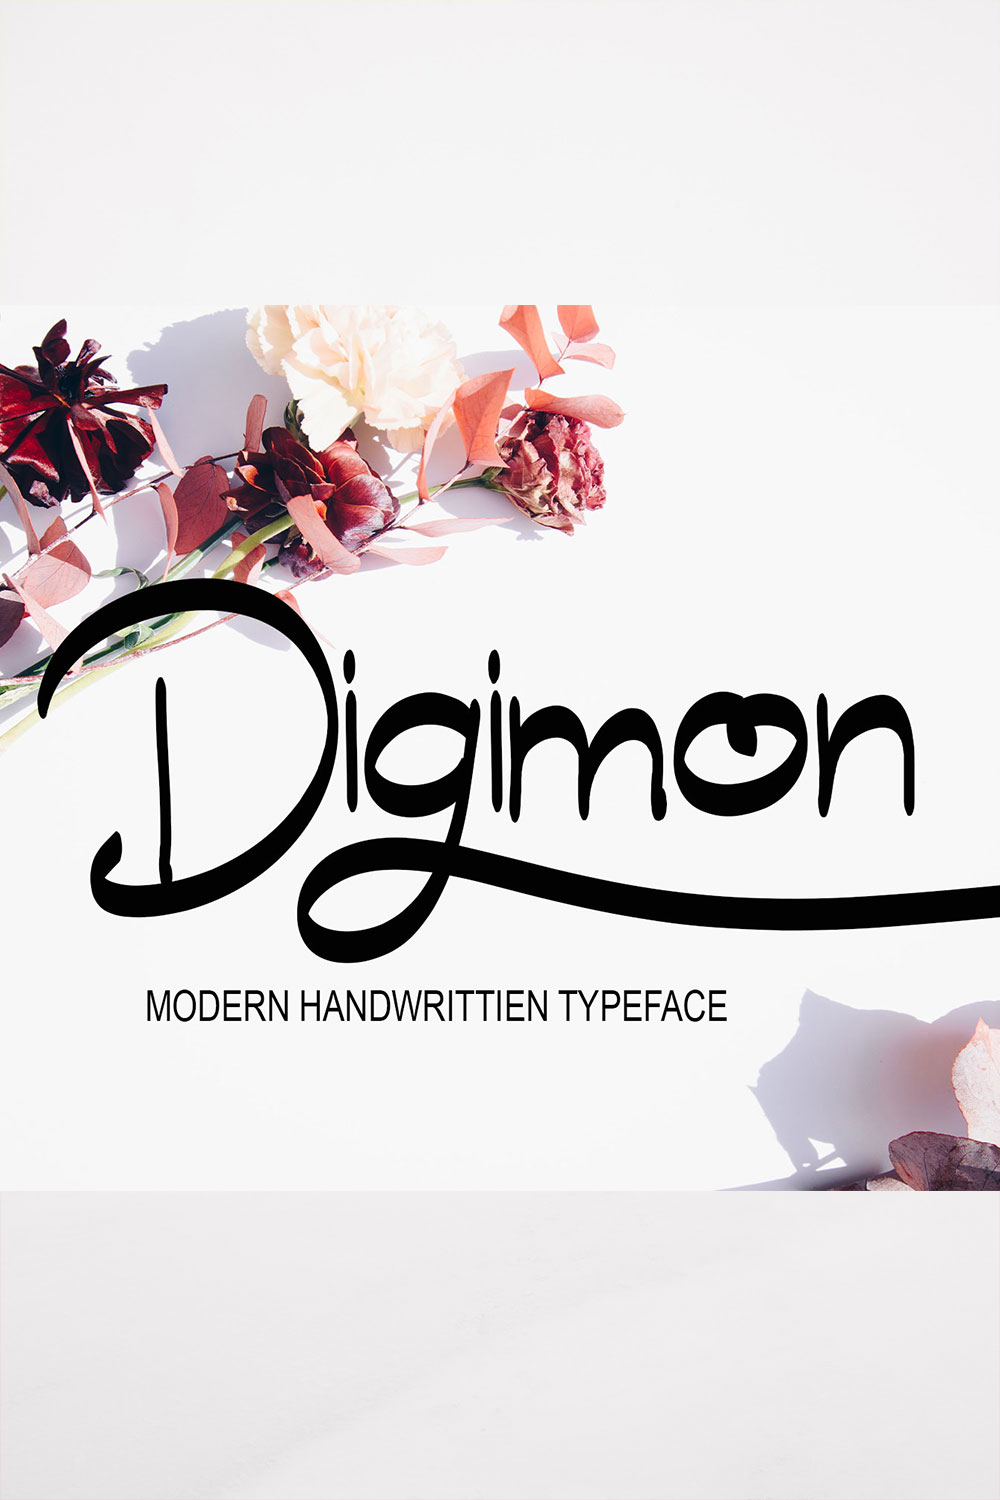 Digimon Font Script Signature Design pinterest image.